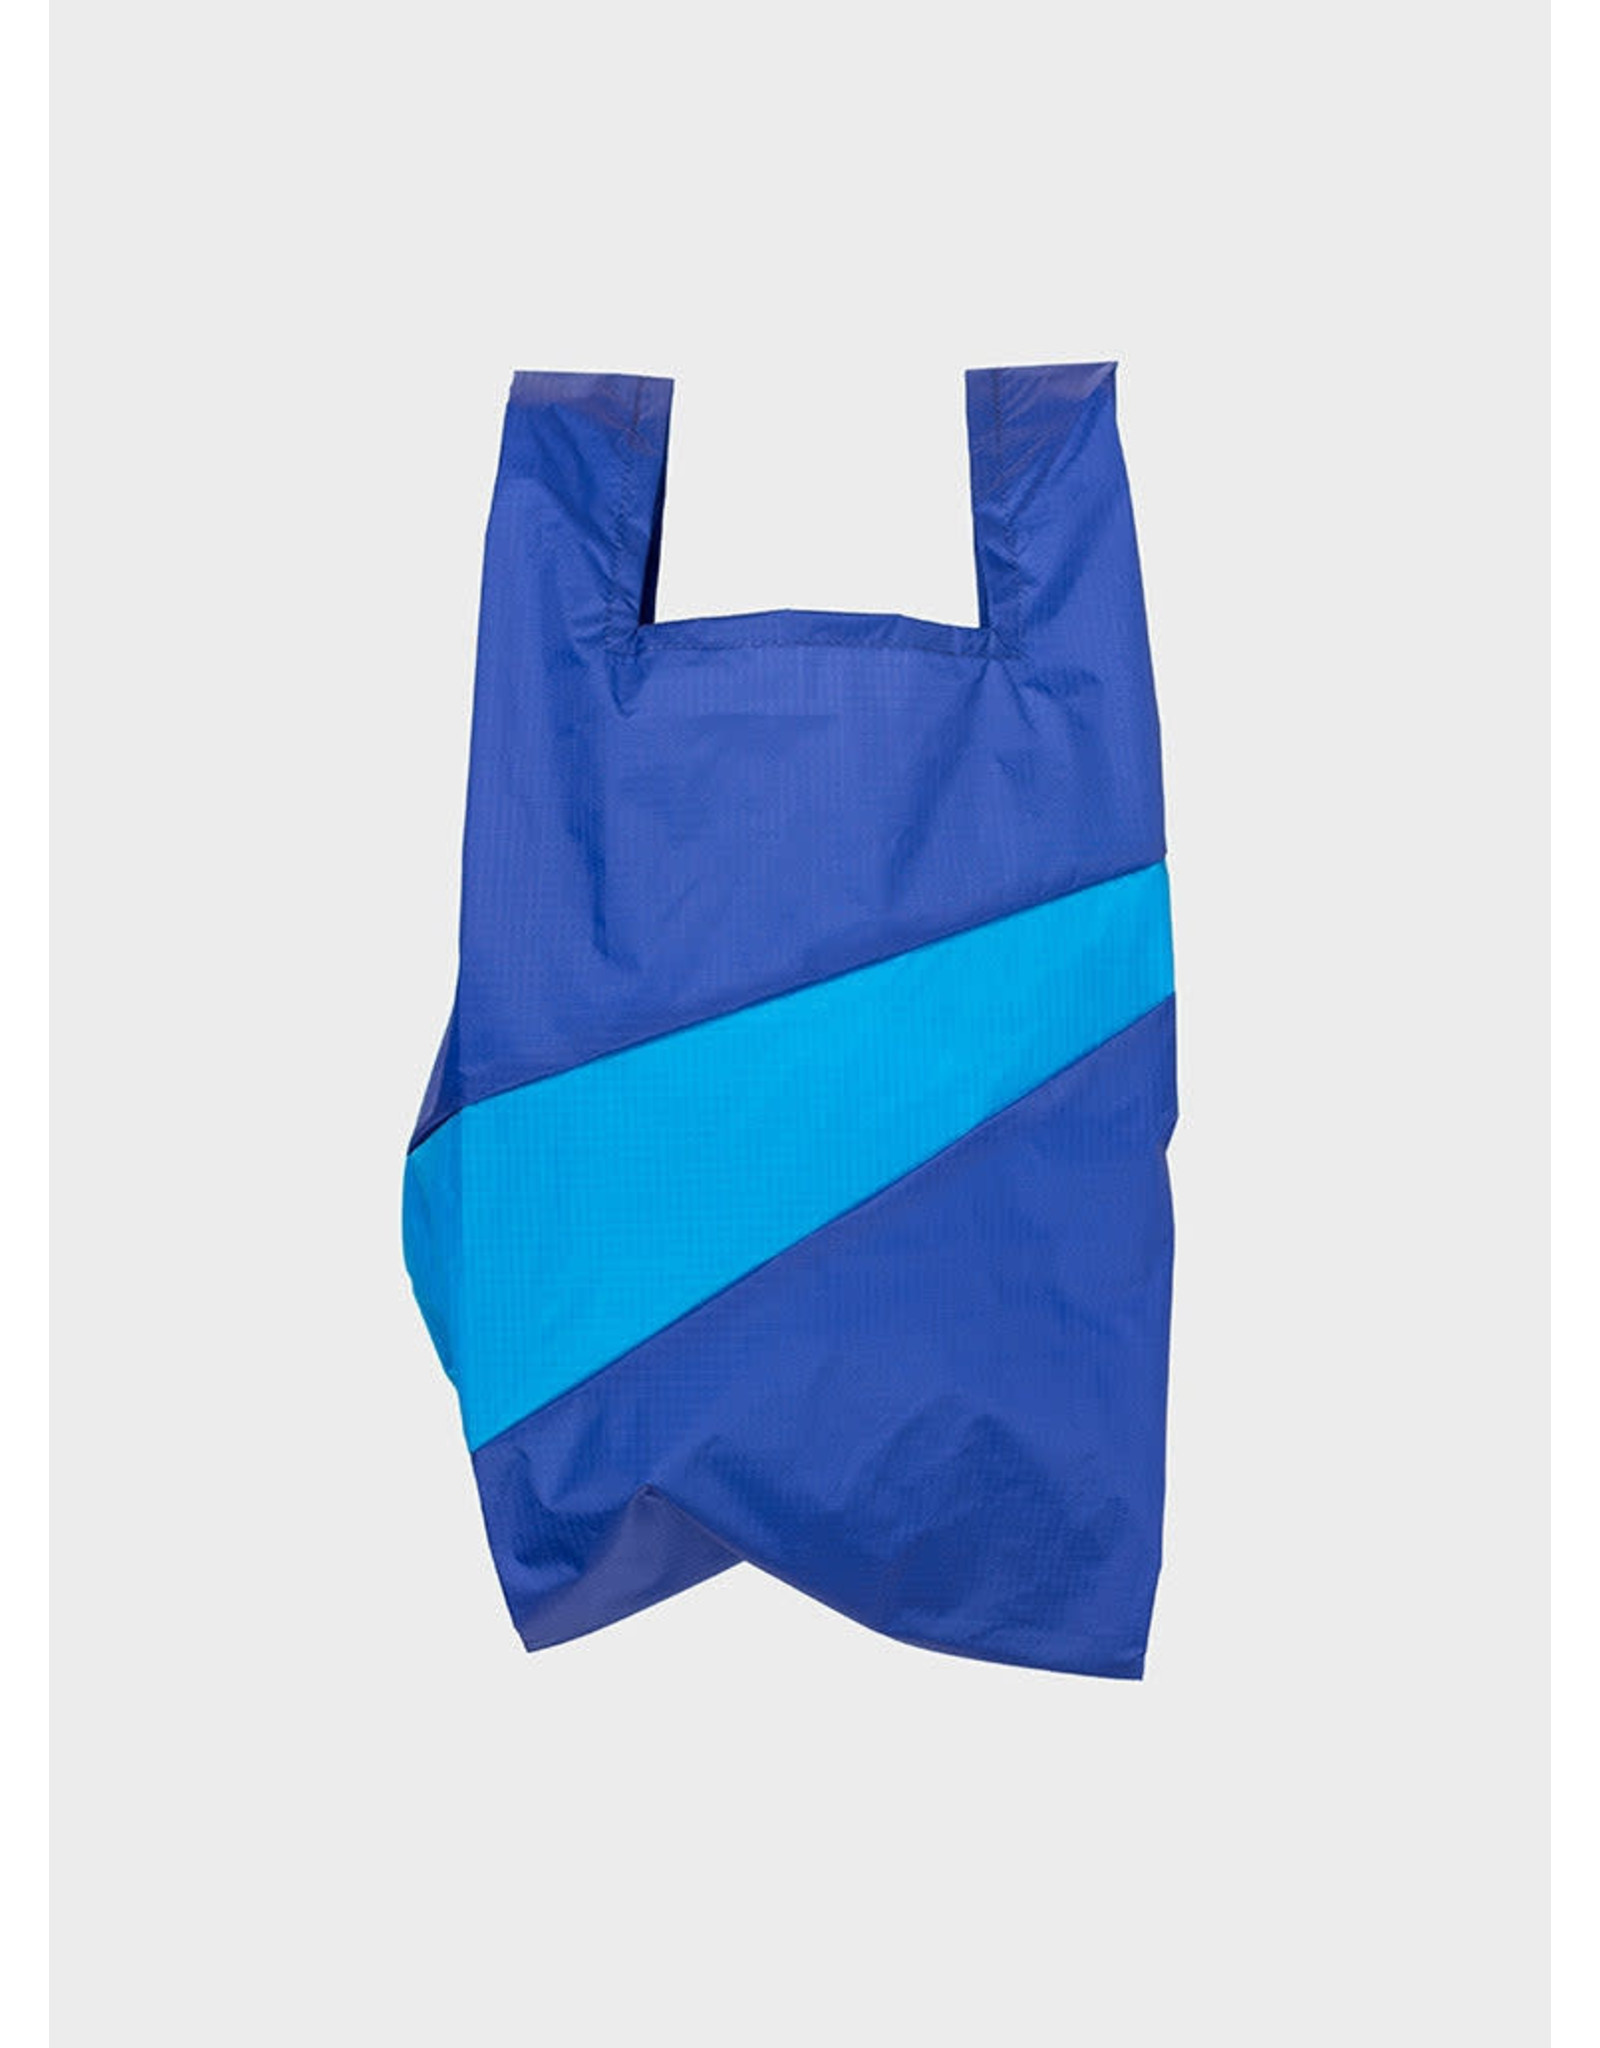 Susan Bijl Shopping bag M,  Electric Blue & Sky Blue - 27 x 55 x 18 cm